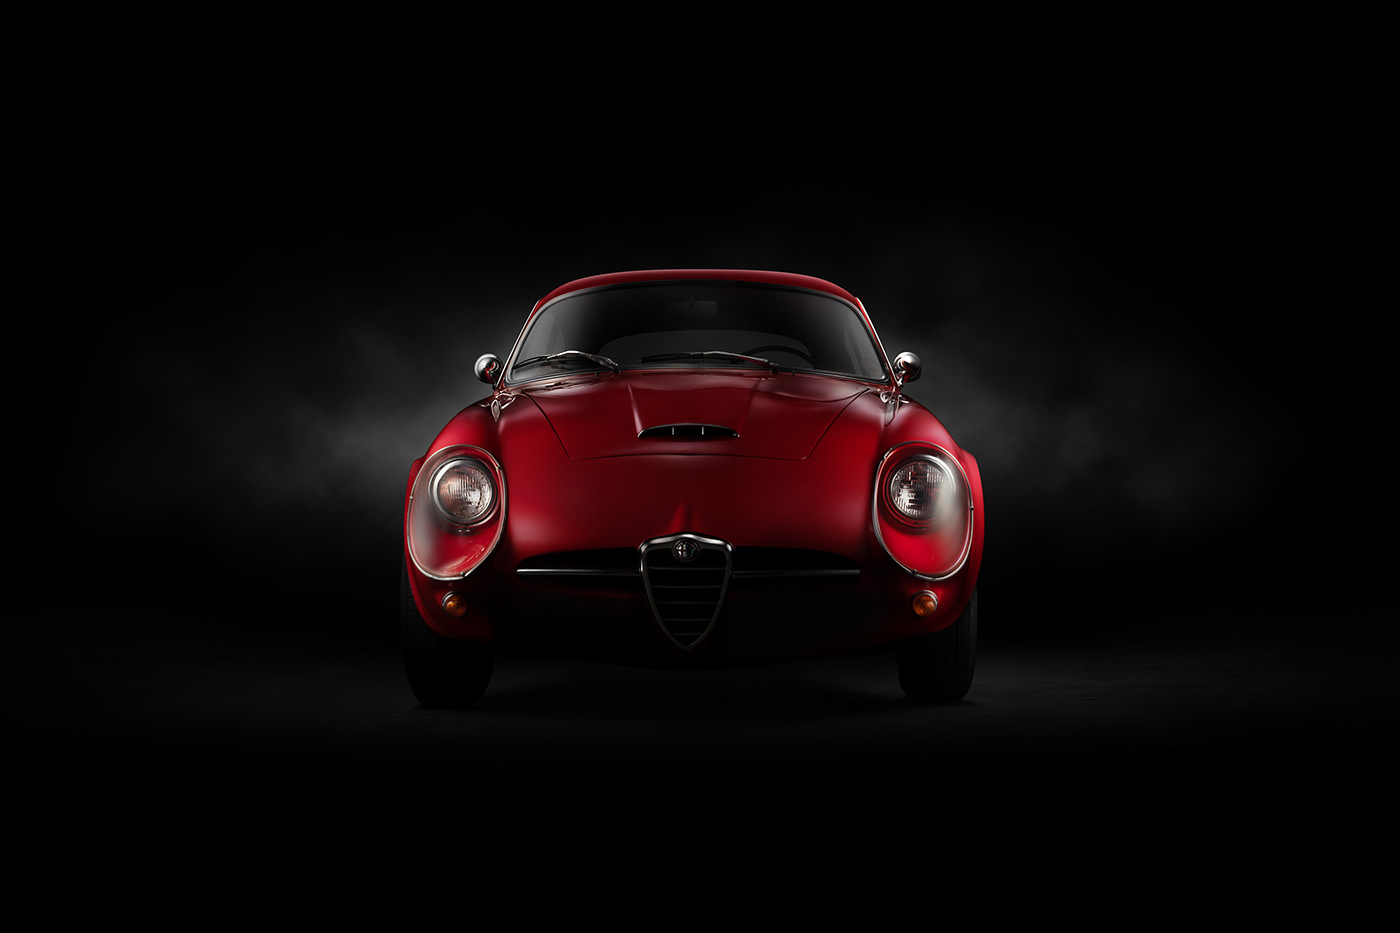 Alfa Romeo conrera automotive art Automotive Photographer car collection car fine art classic car FDL technique